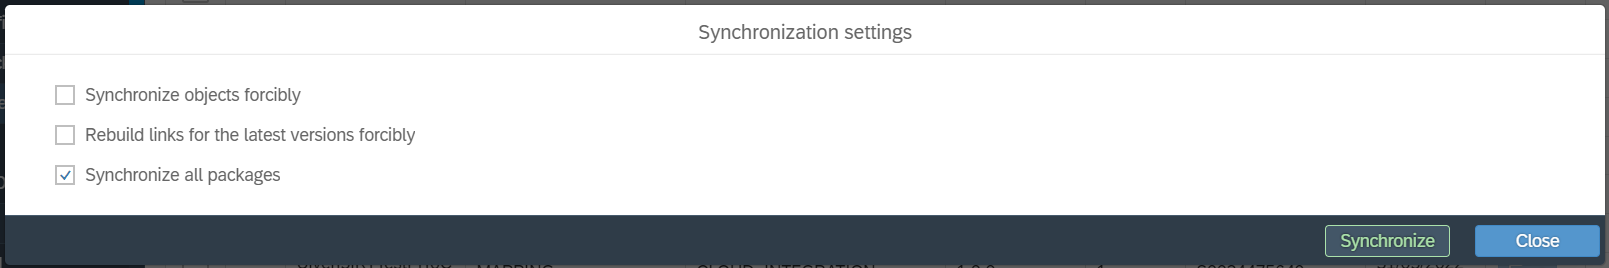 synchronization config dialog cpi